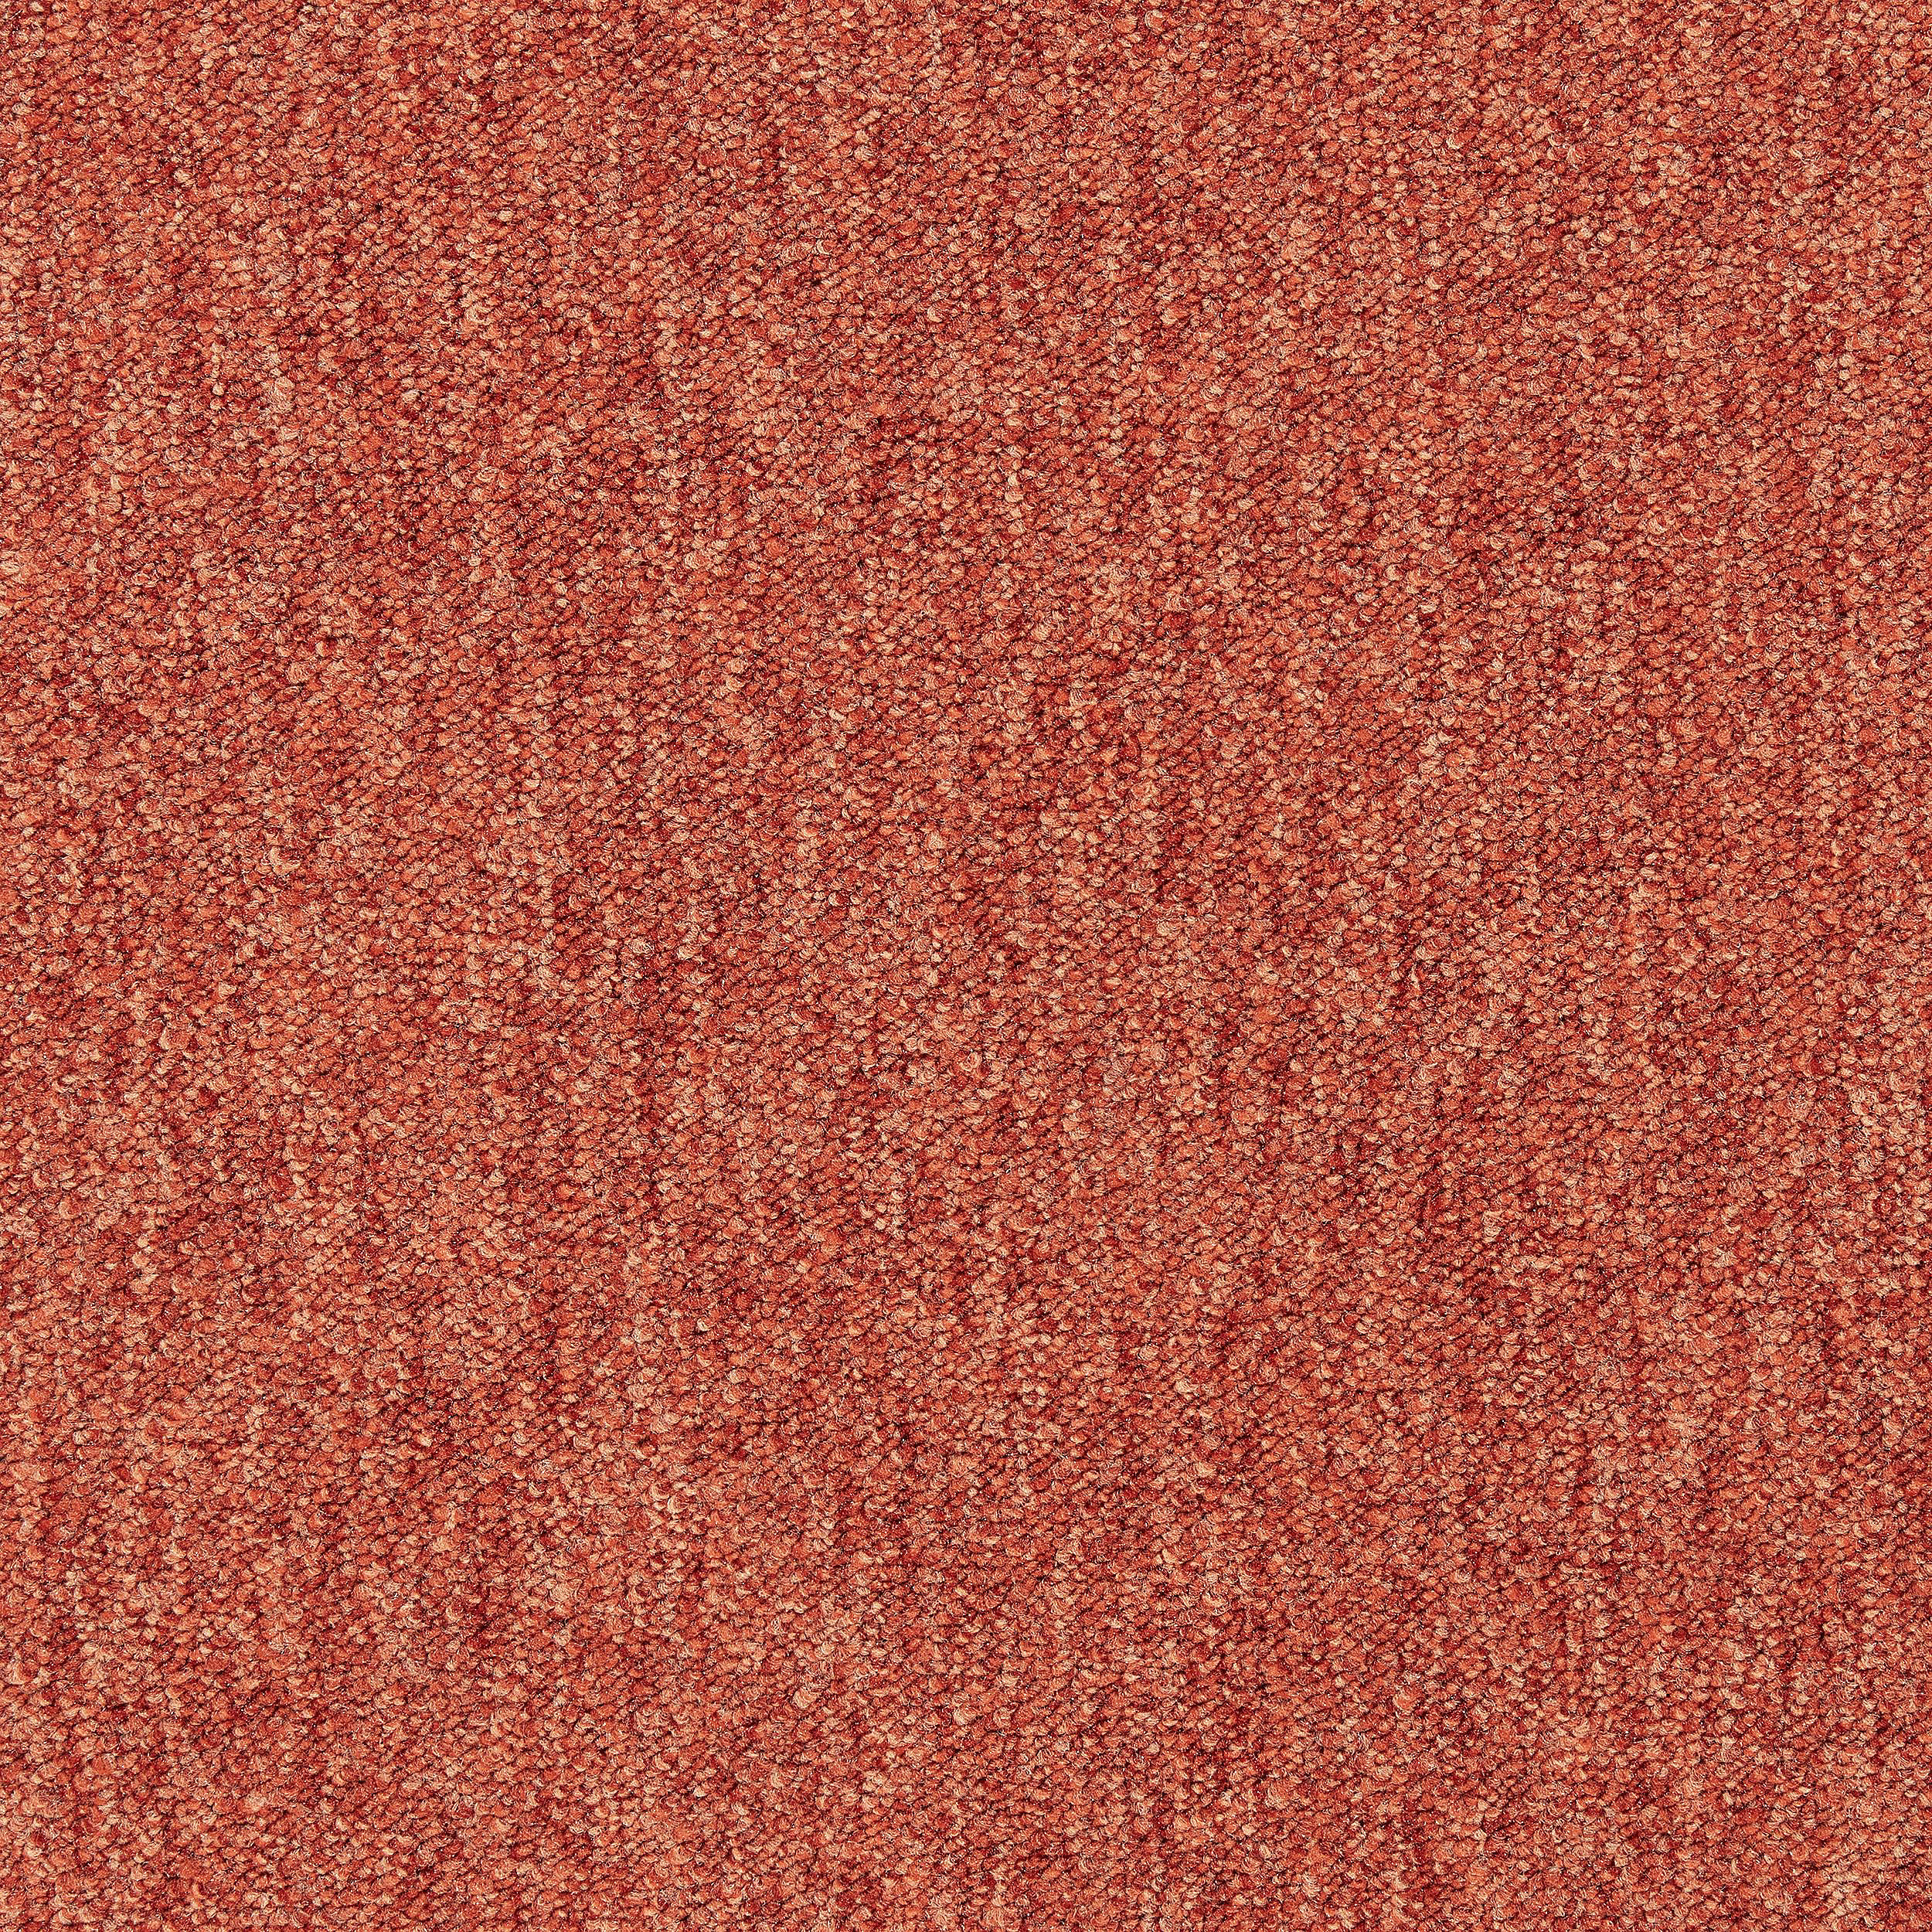 Heuga 530 II Carpet Tile In Terracotta número de imagen 9